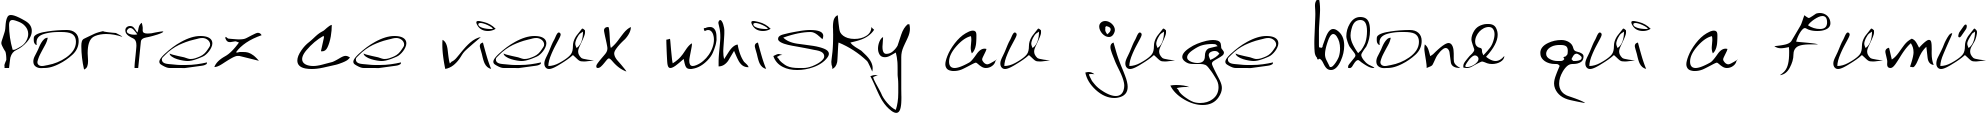 Пример написания шрифтом Scrawl текста на французском